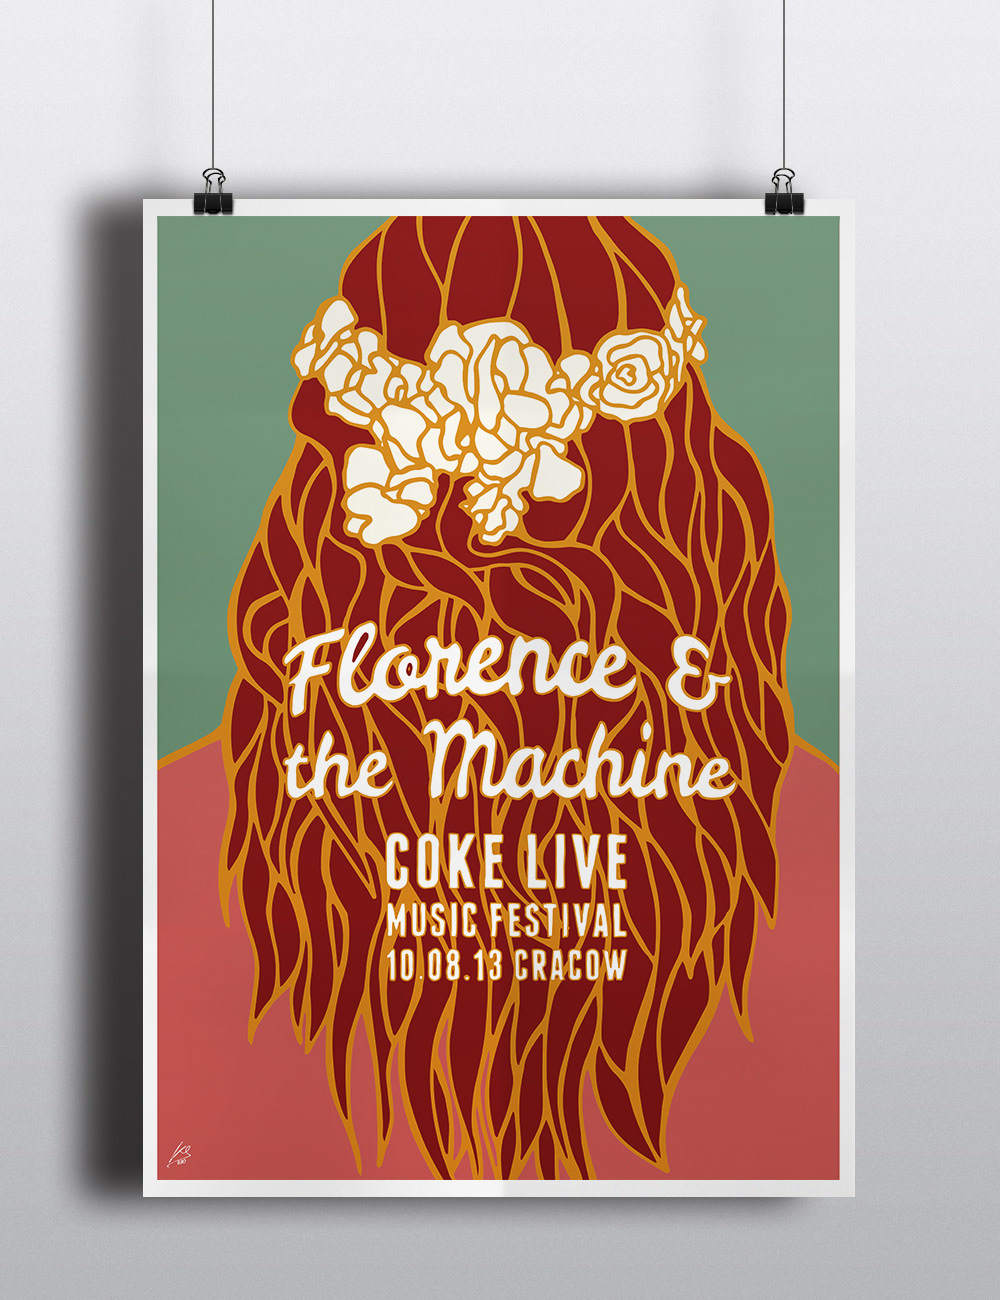 poster design lettering Florence Welch Florence machine fatm concert live coke live